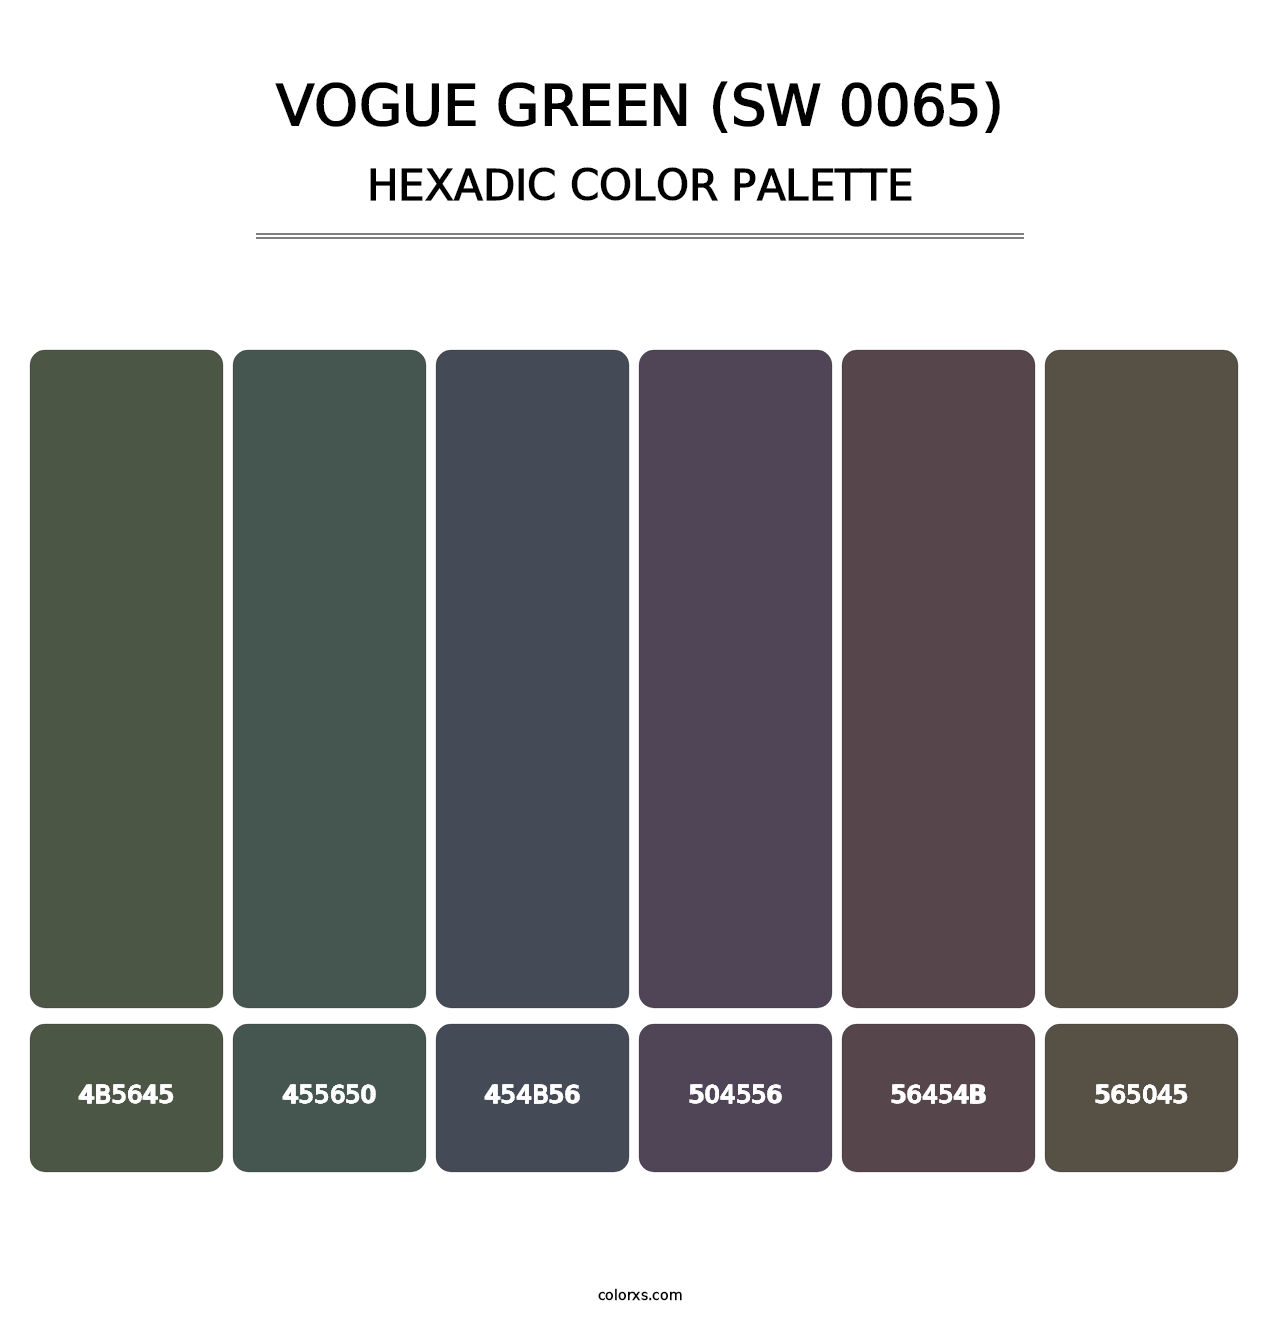 Vogue Green (SW 0065) - Hexadic Color Palette